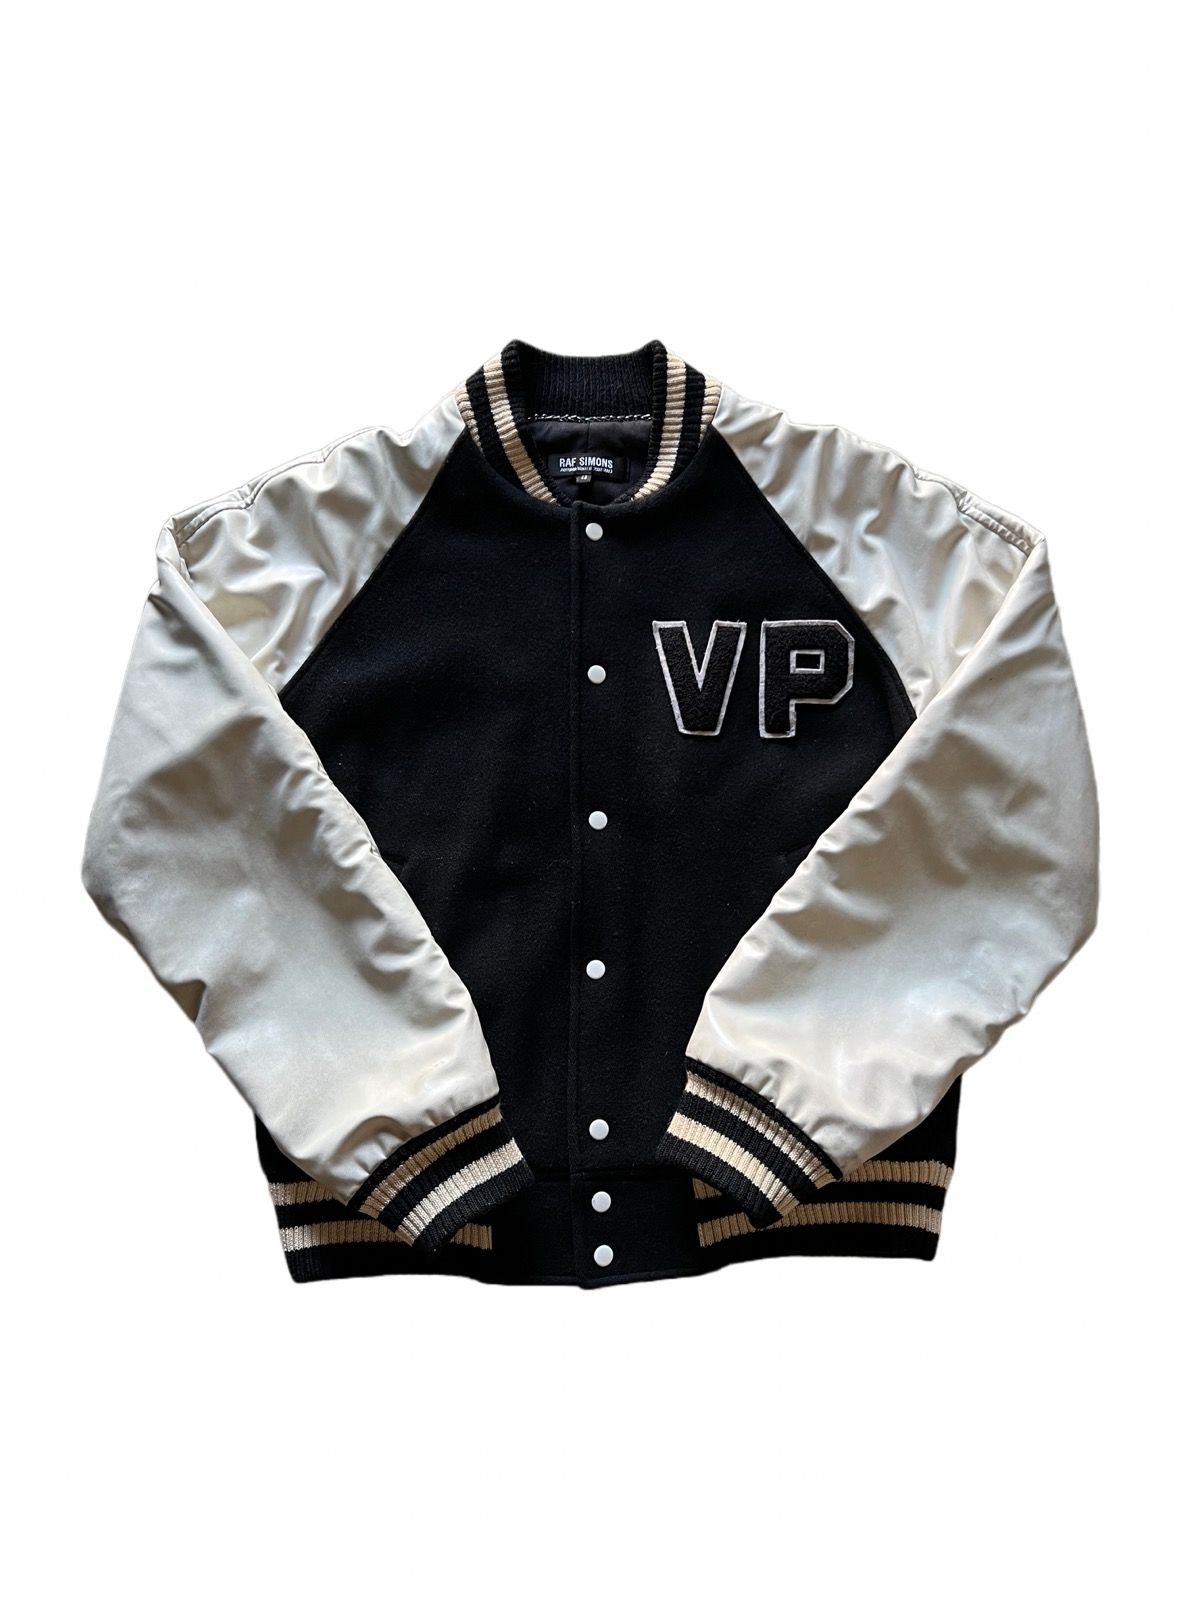 Raf Simons Raf Simons AW03 Virginia Creeper Varsity Jacket | Grailed